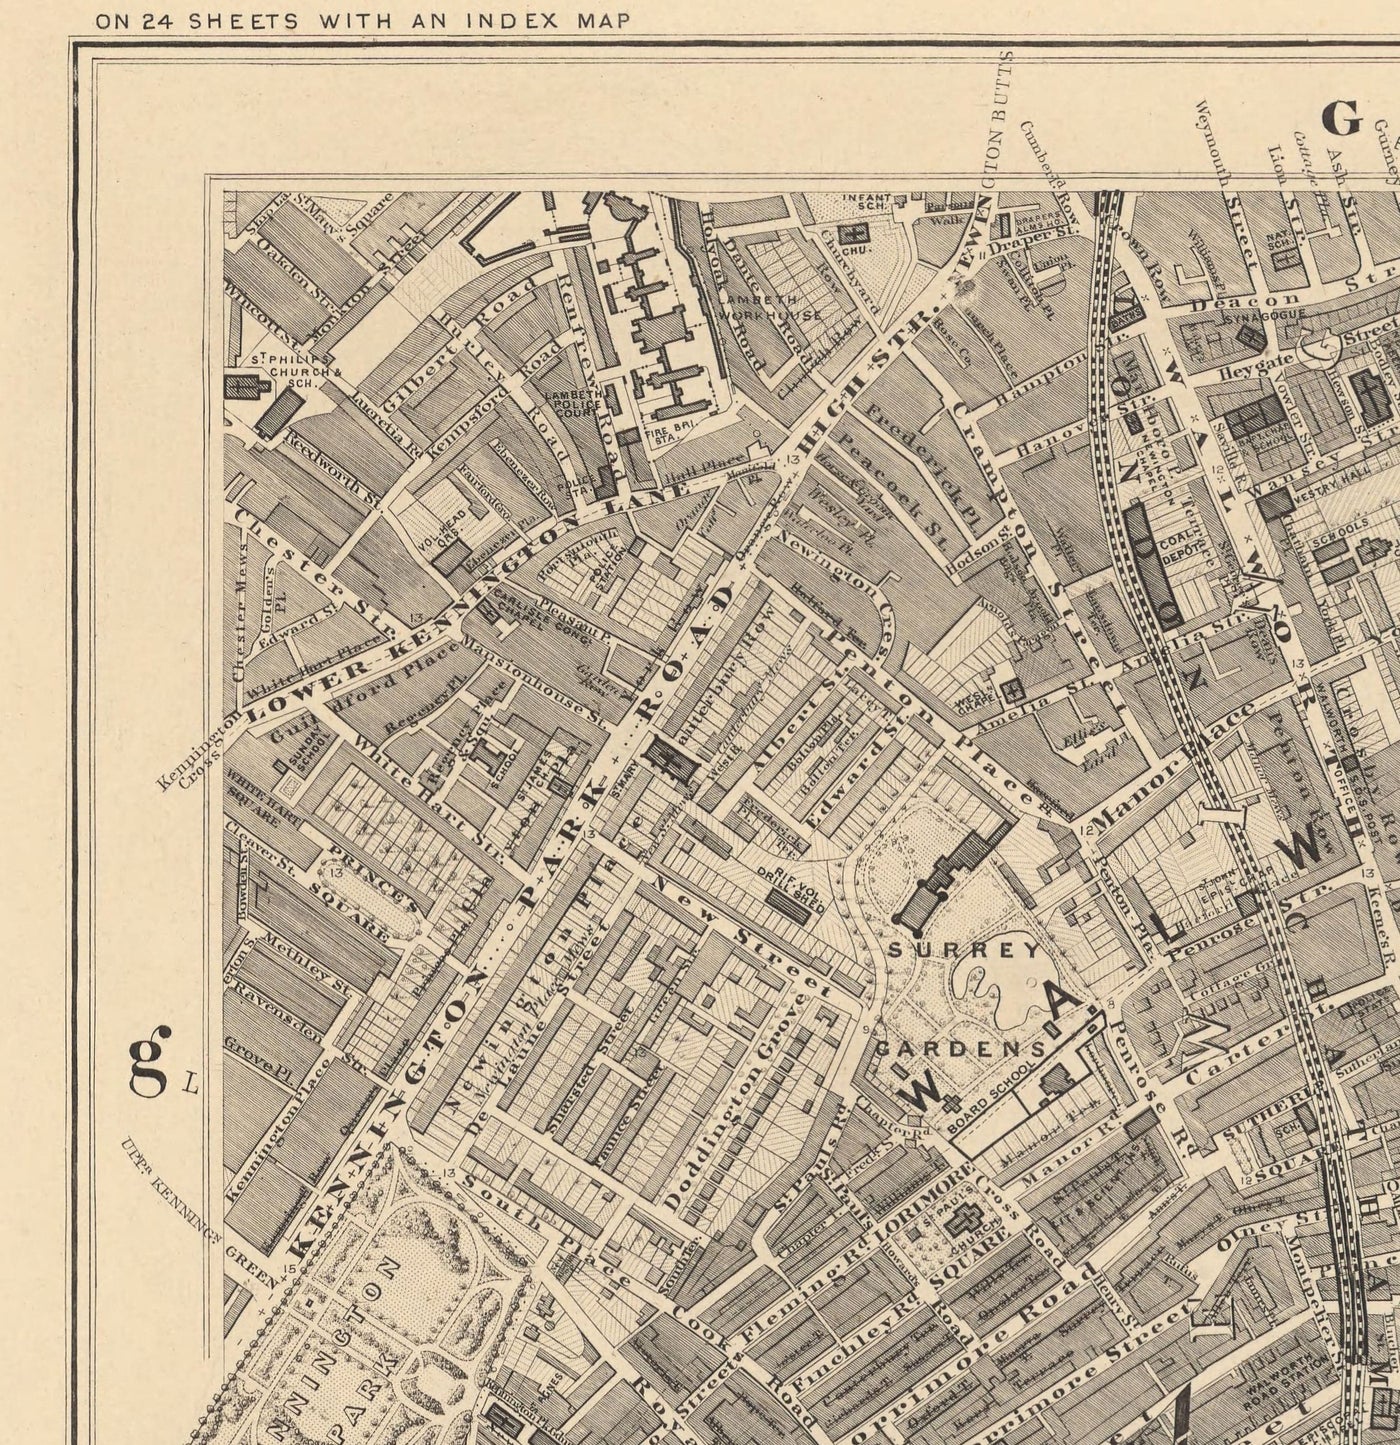 Ancienne carte de South London par Edward Stanford, 1862 - Camberwell, Peckham, Walworth, Nunhead, Old Kent Road - SE5, SE17, SE15, SE1, SE16